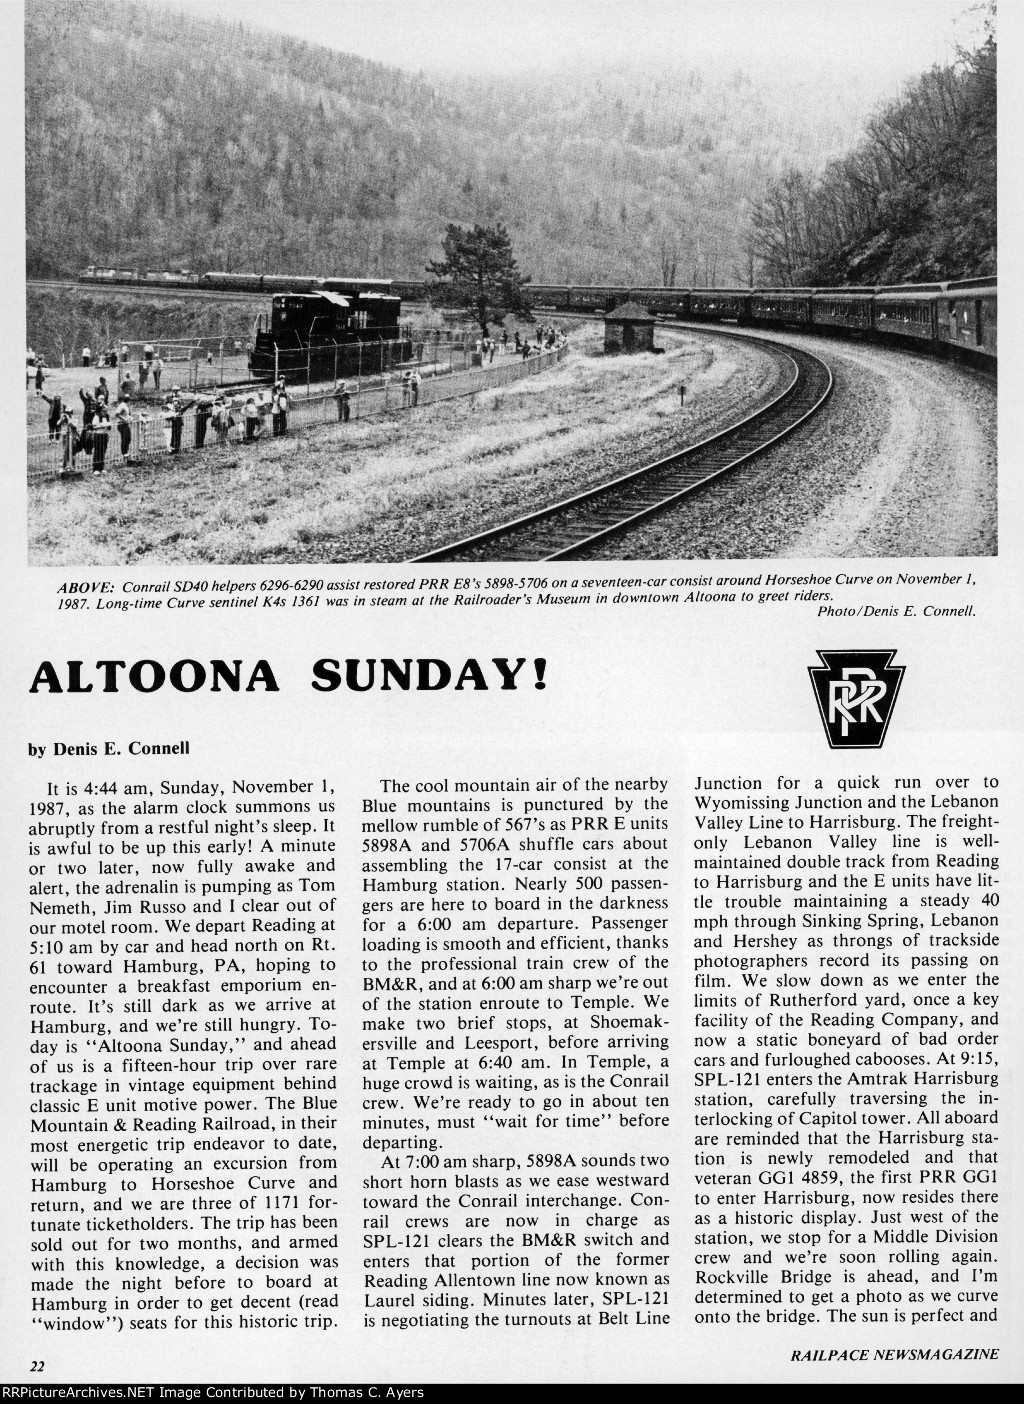 "Altoona Sunday," Page 22, 1988